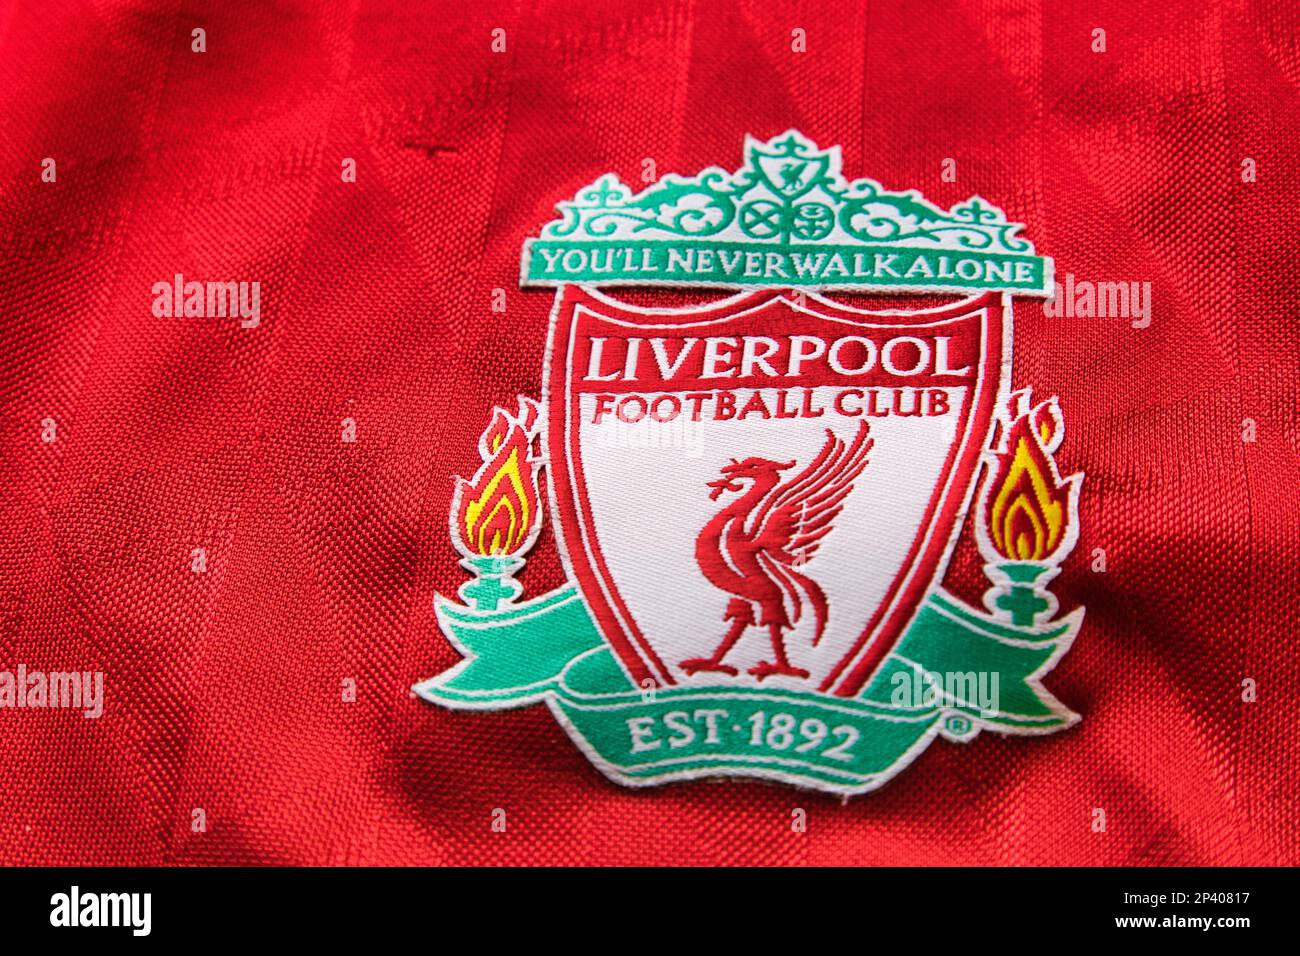 Liverpool FC club emblem on red soccer shirt. Stock Photo